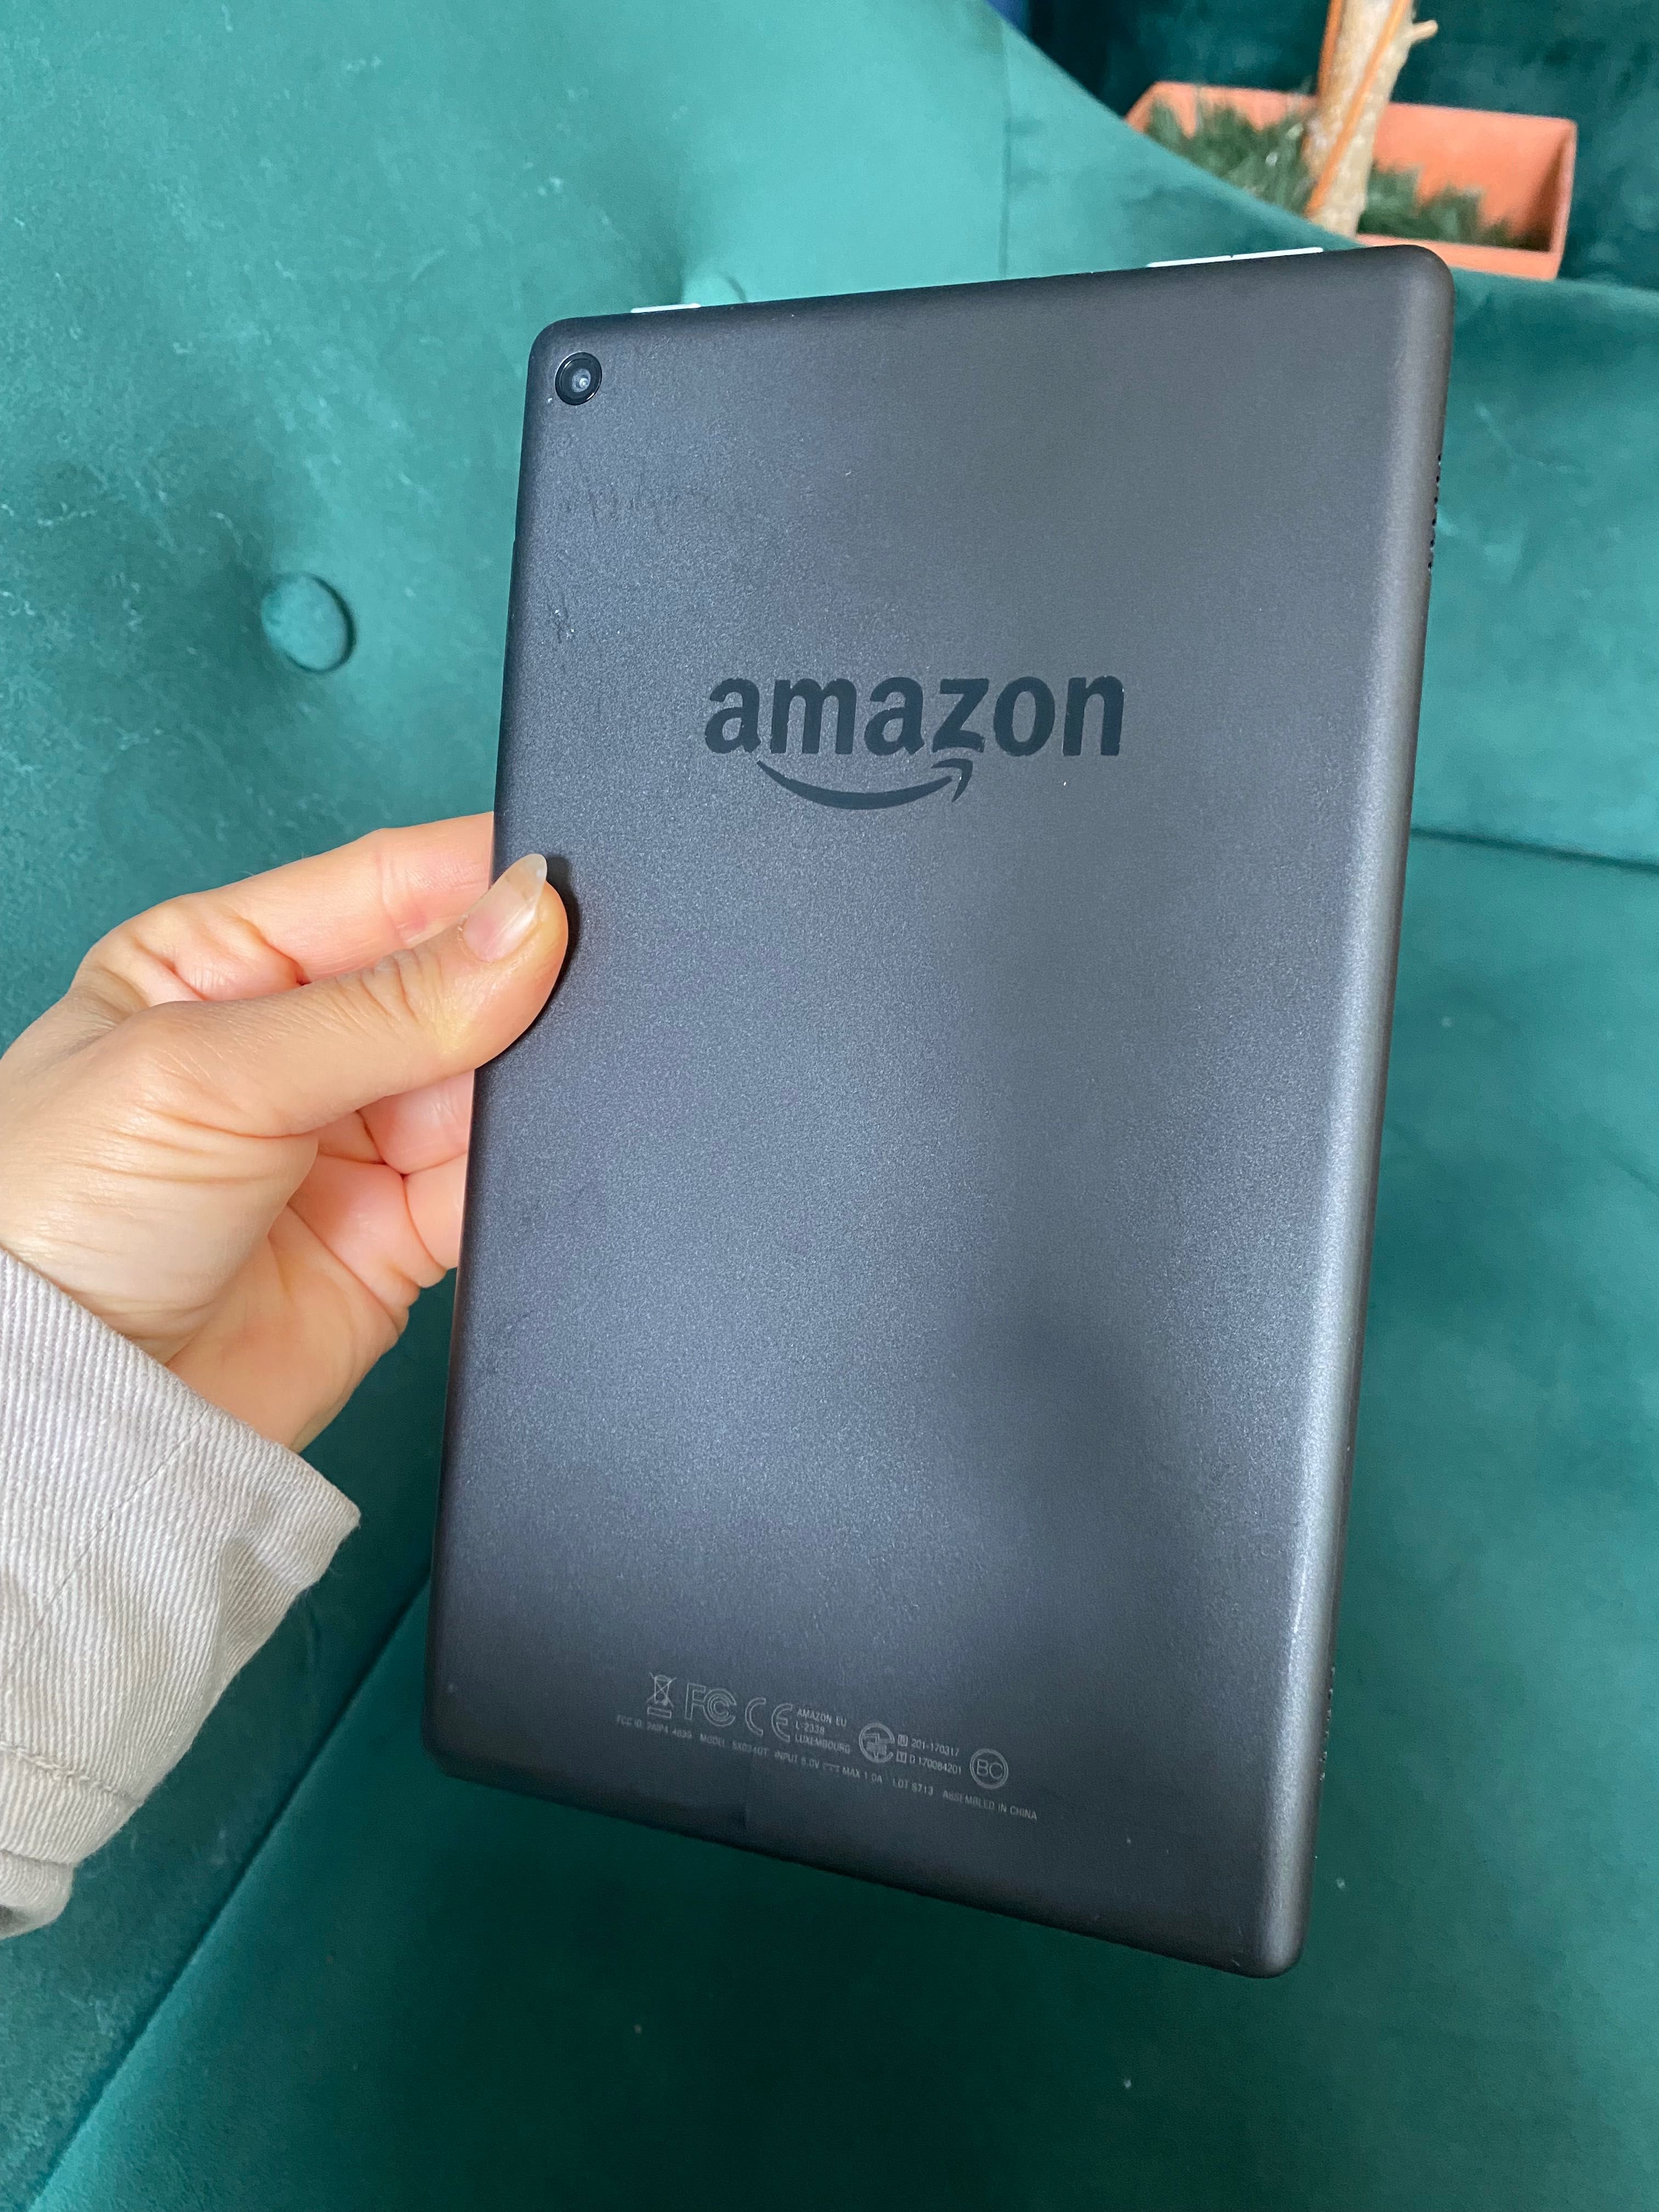 Amazon Kindle Fire HD 8 7th generation